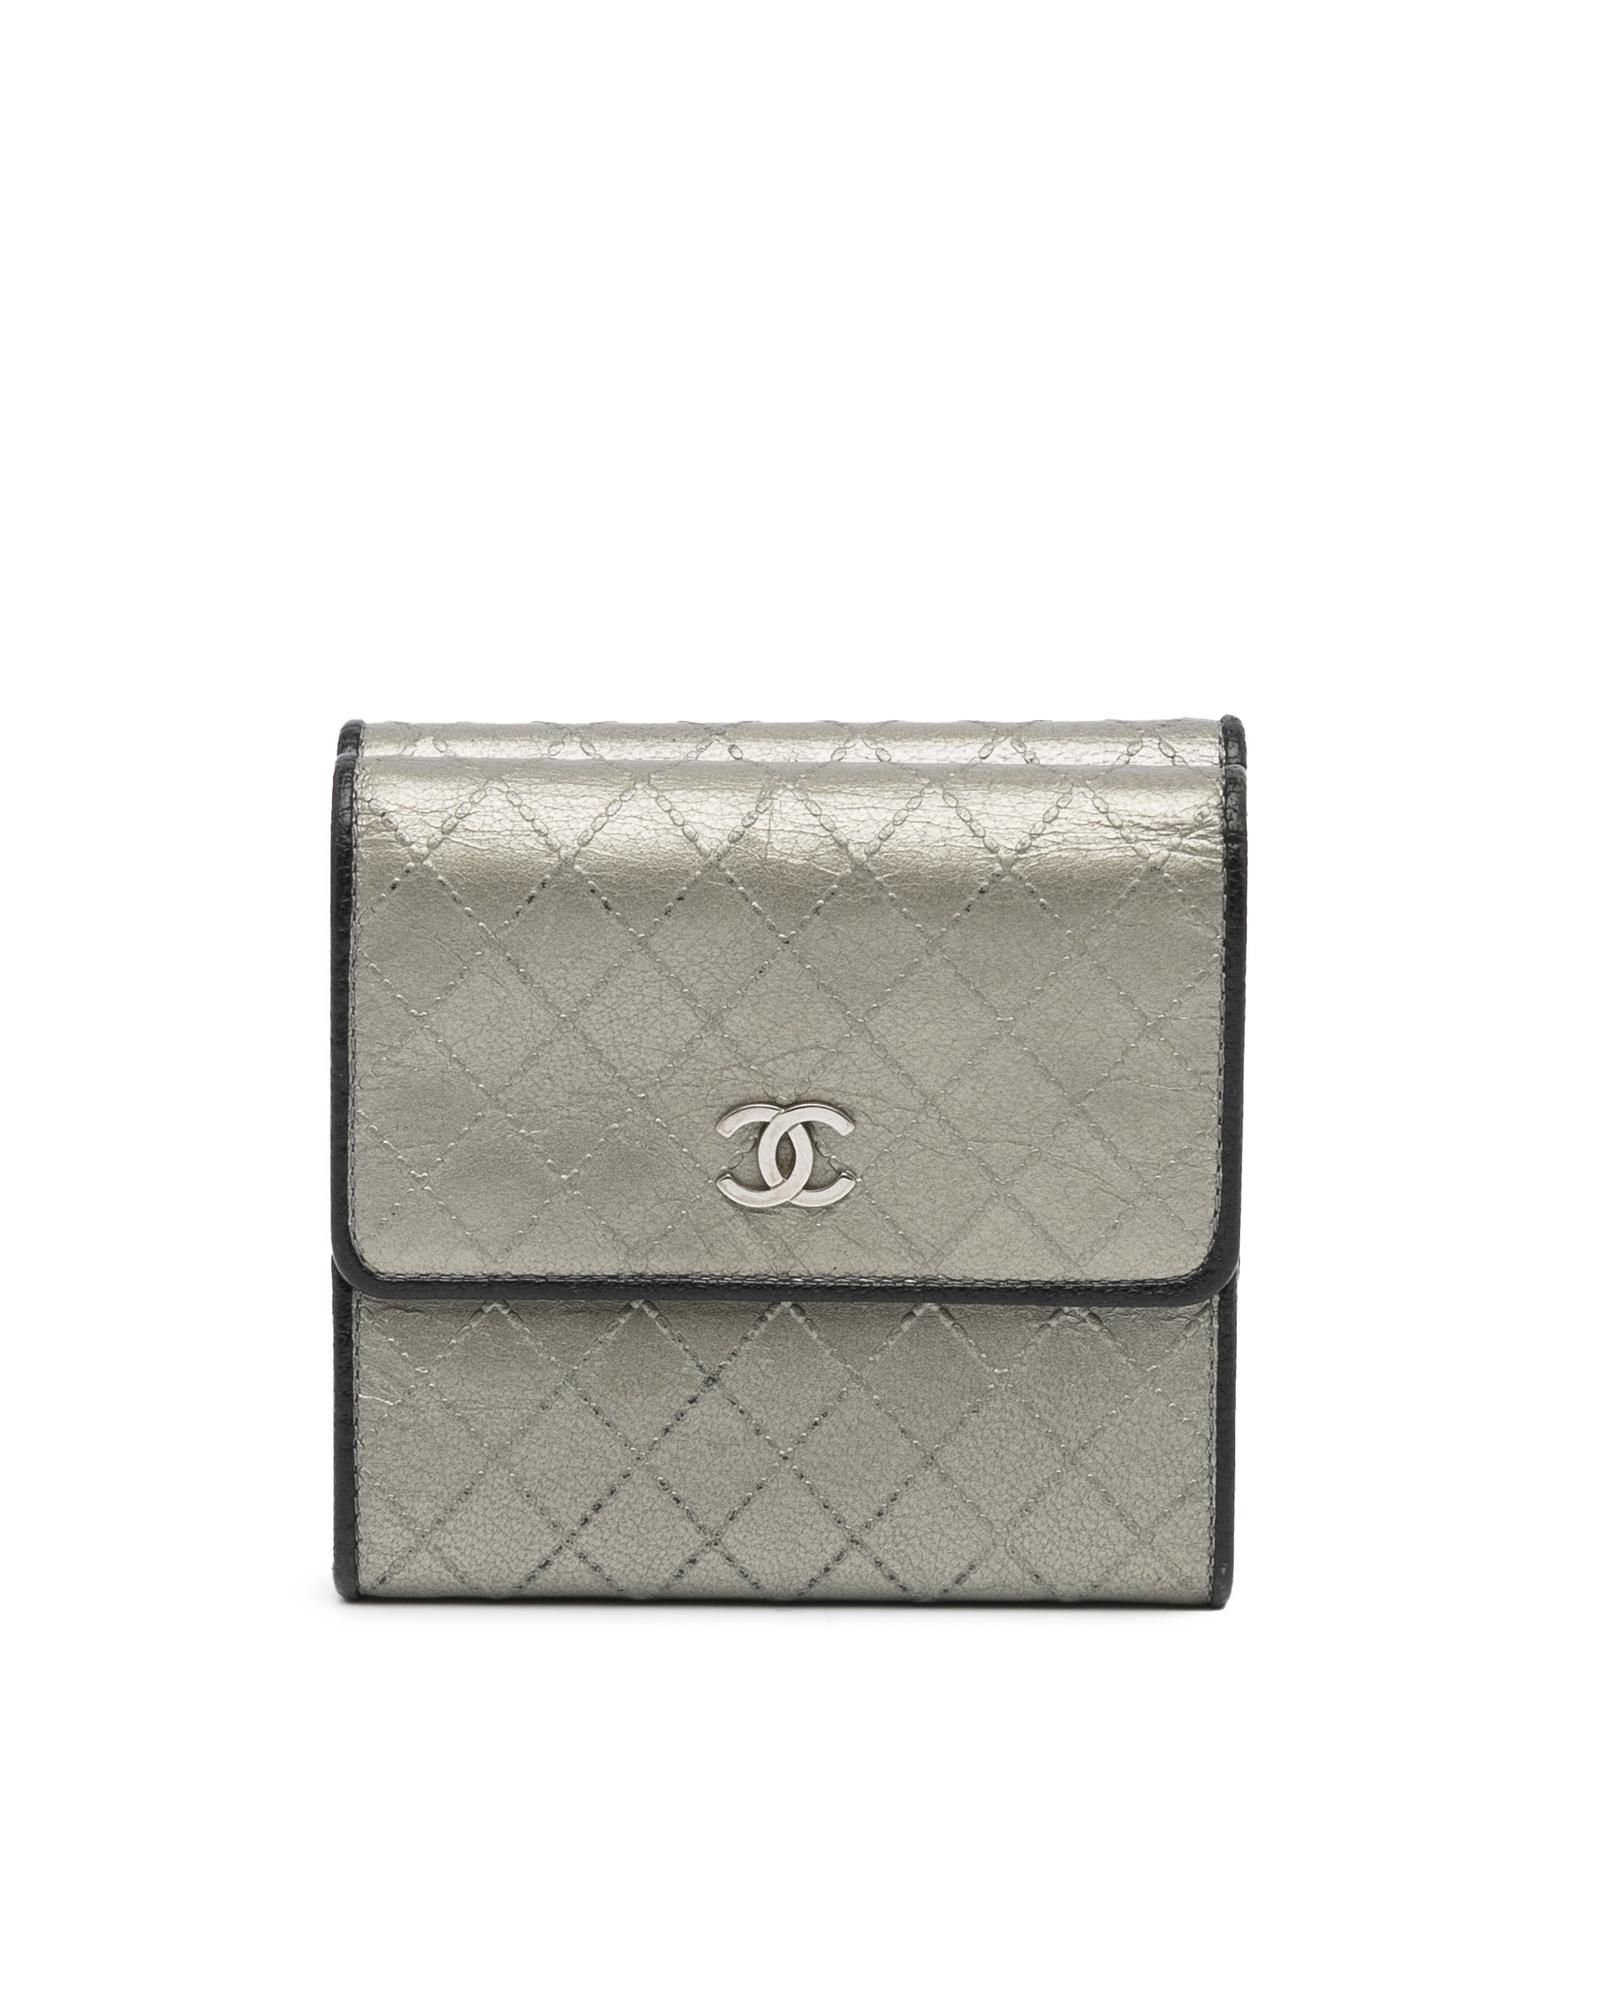 Chanel Wallet on Chain, 22A Dark Beige Caviar Leather, Gold Hardware, New  in Box GA002 - Julia Rose Boston